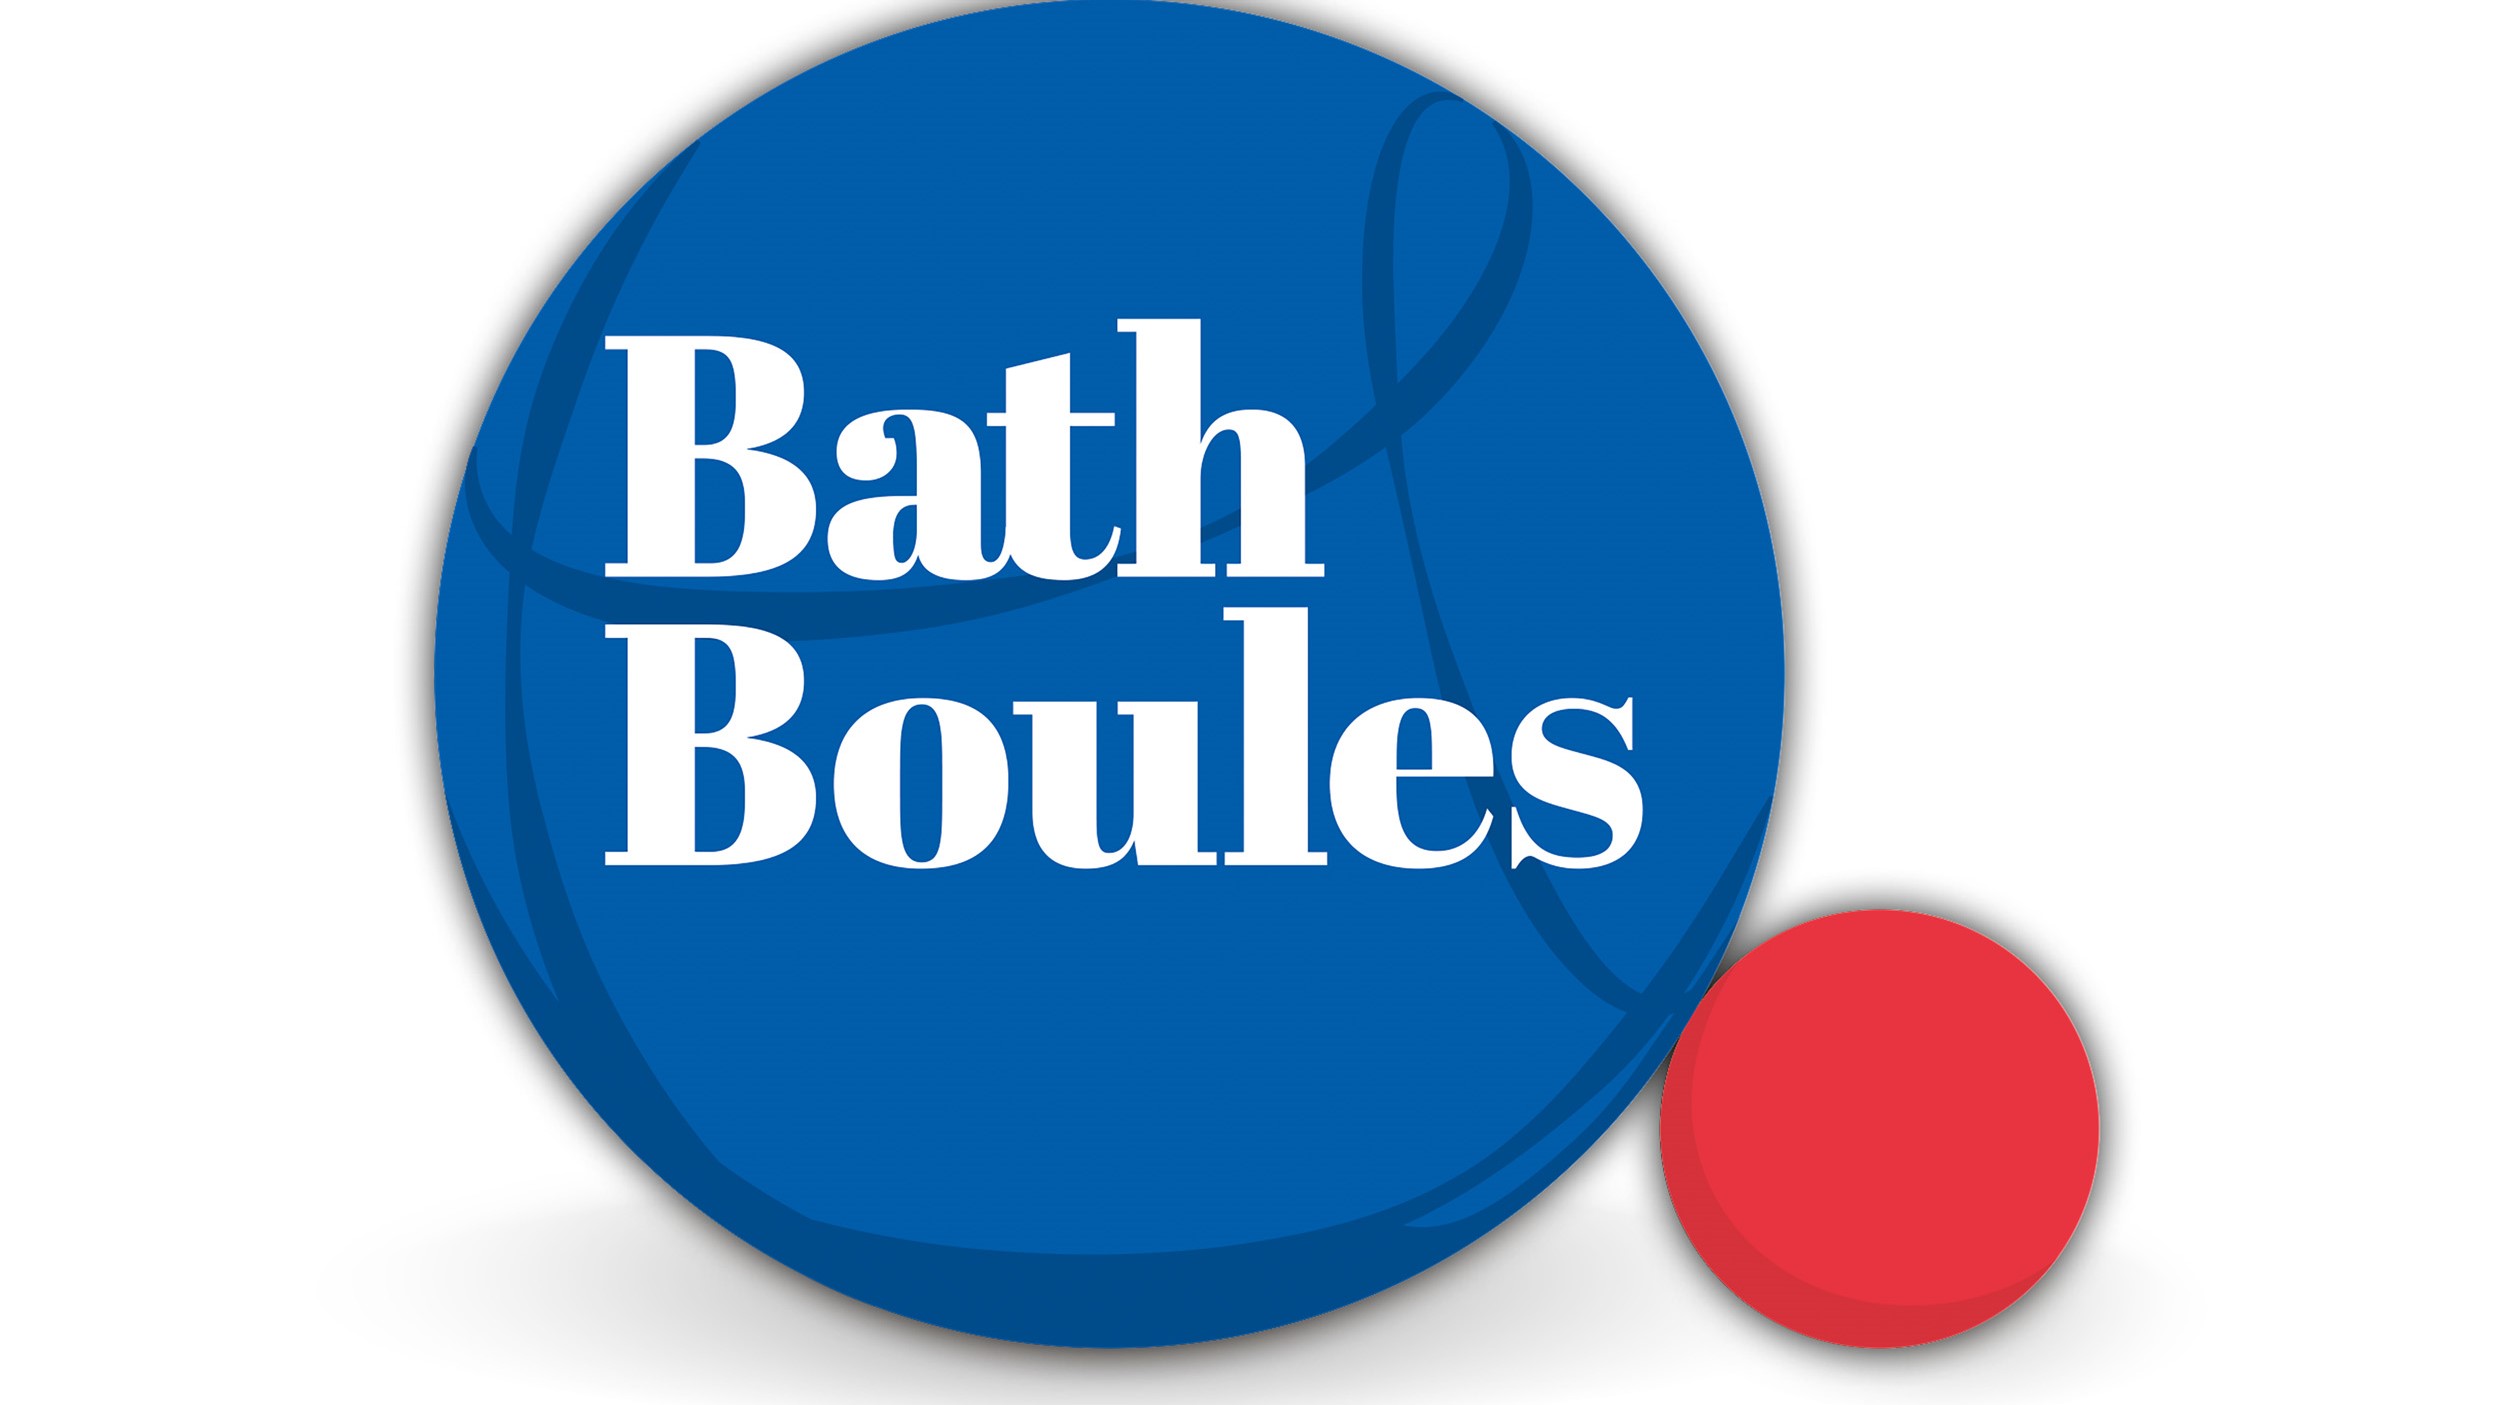 The Bath Boules logo